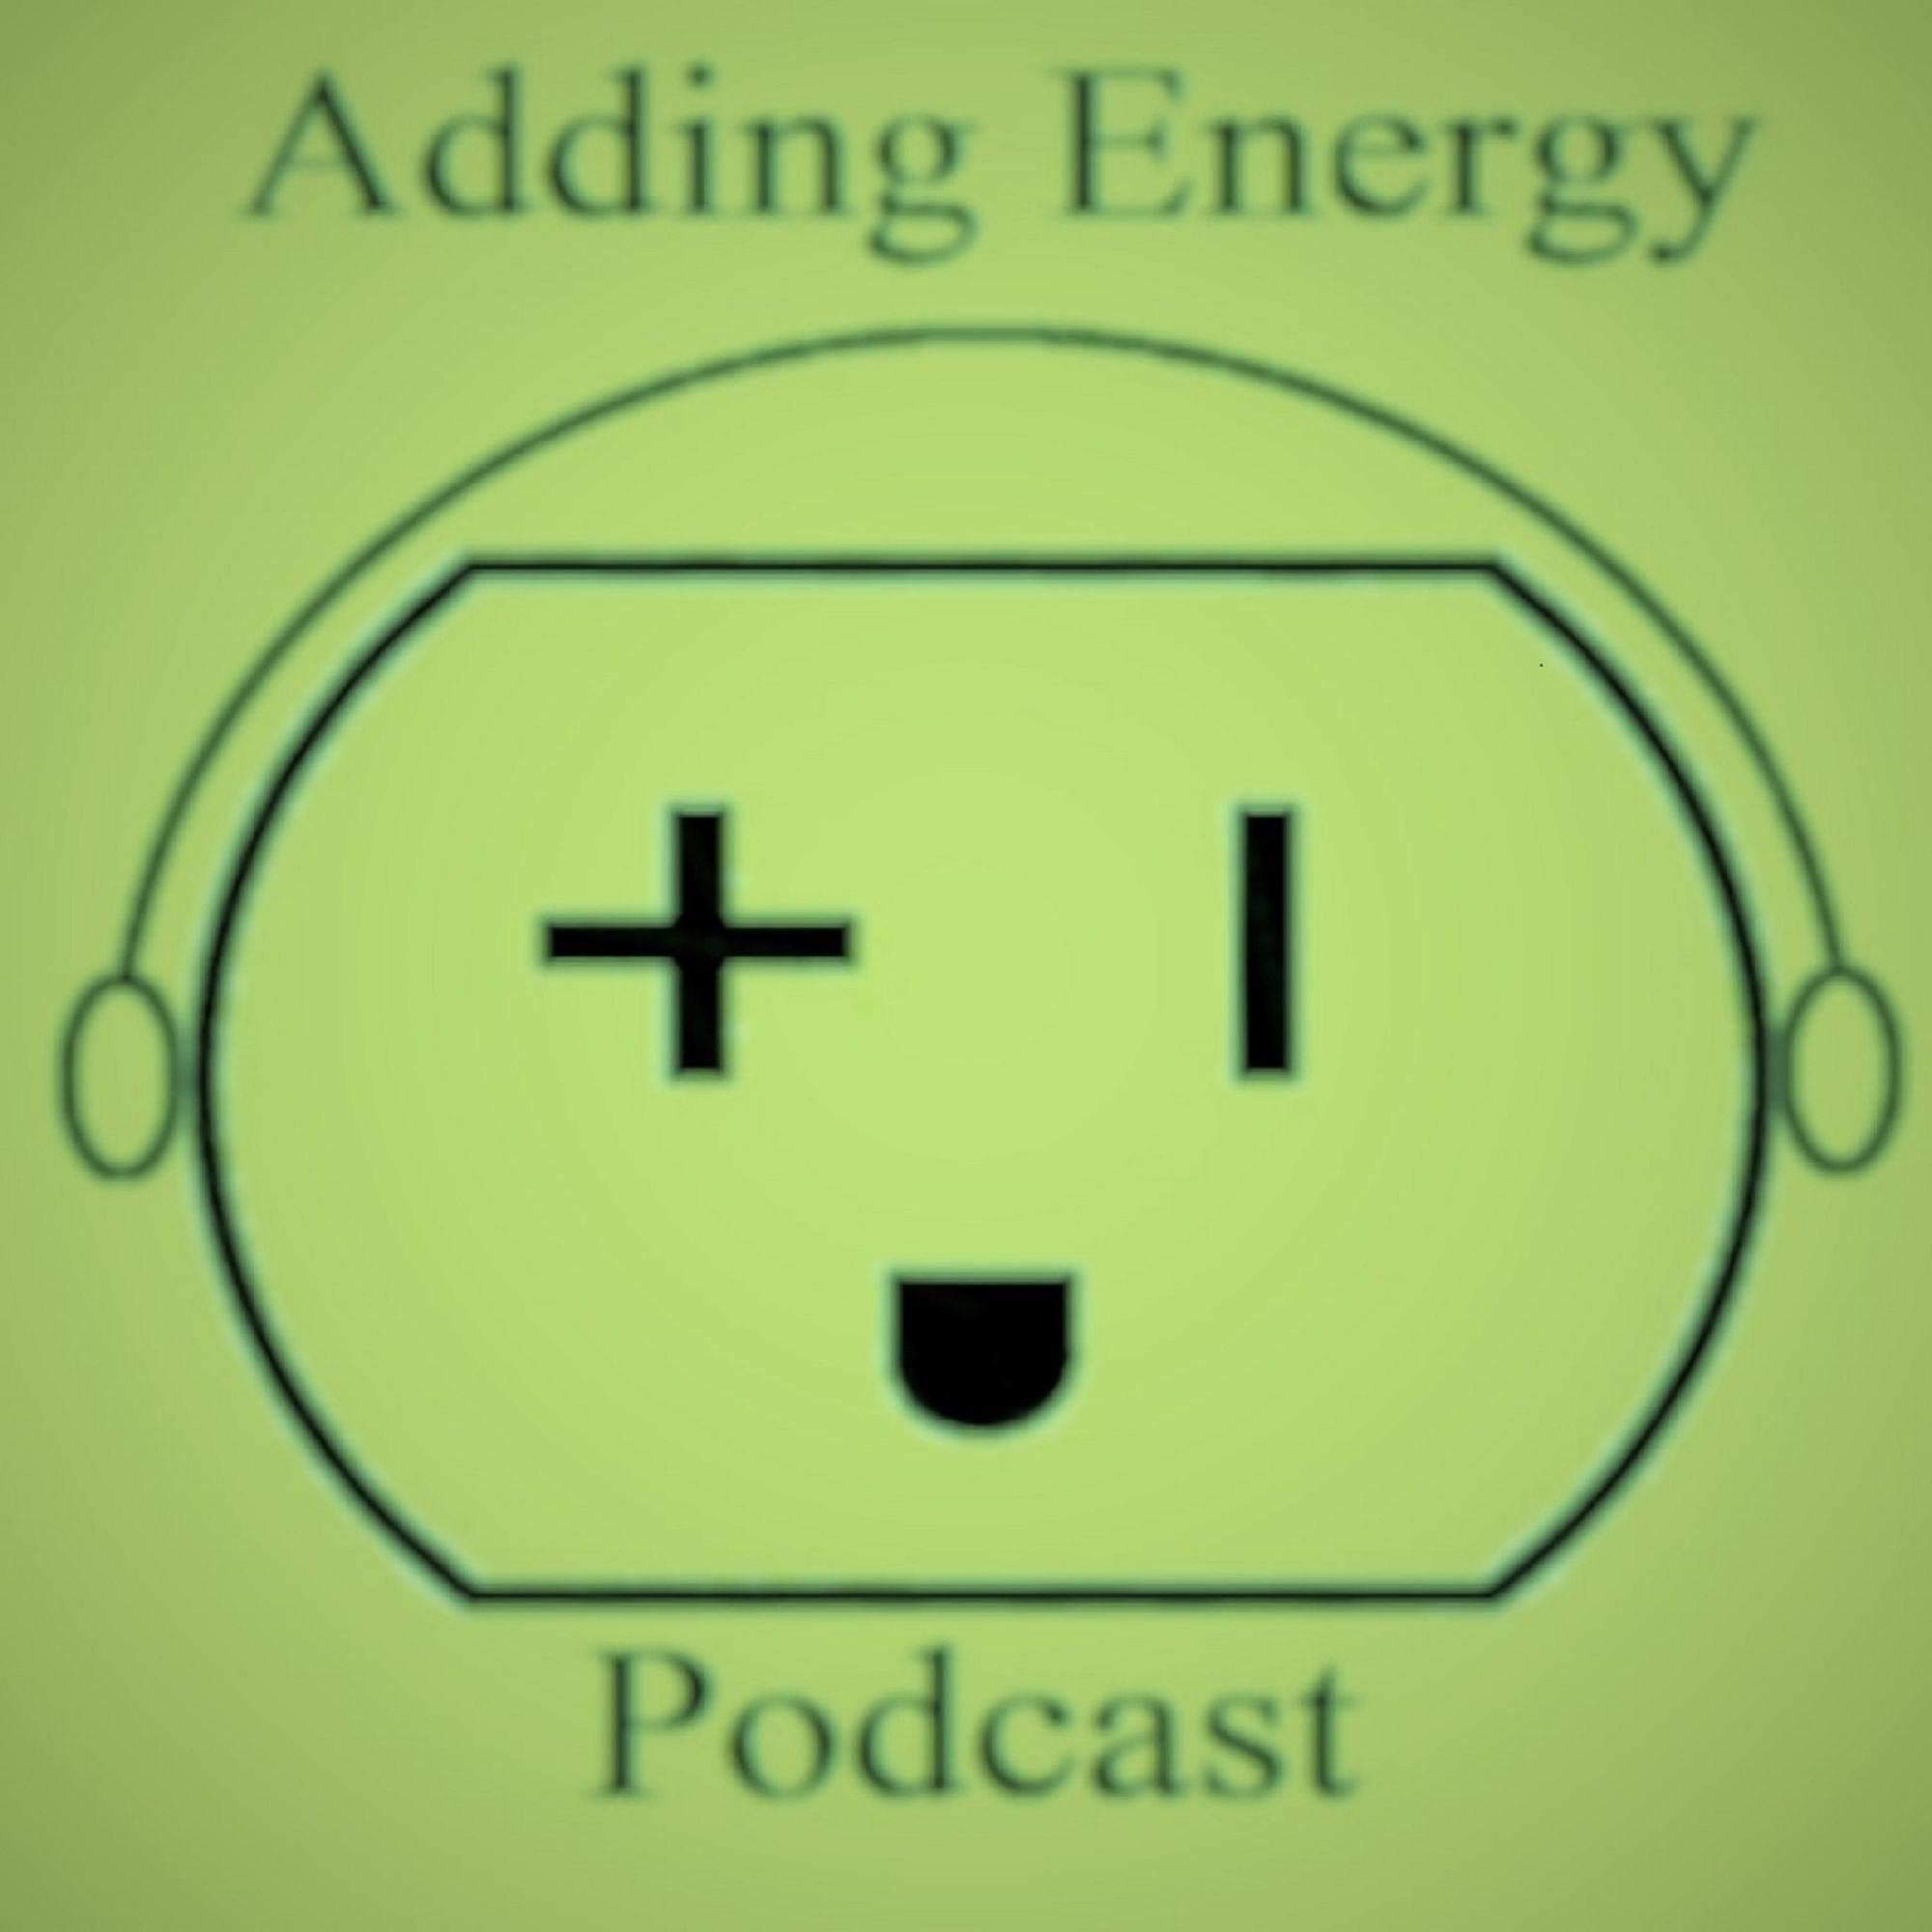 Adding Energy Podcast